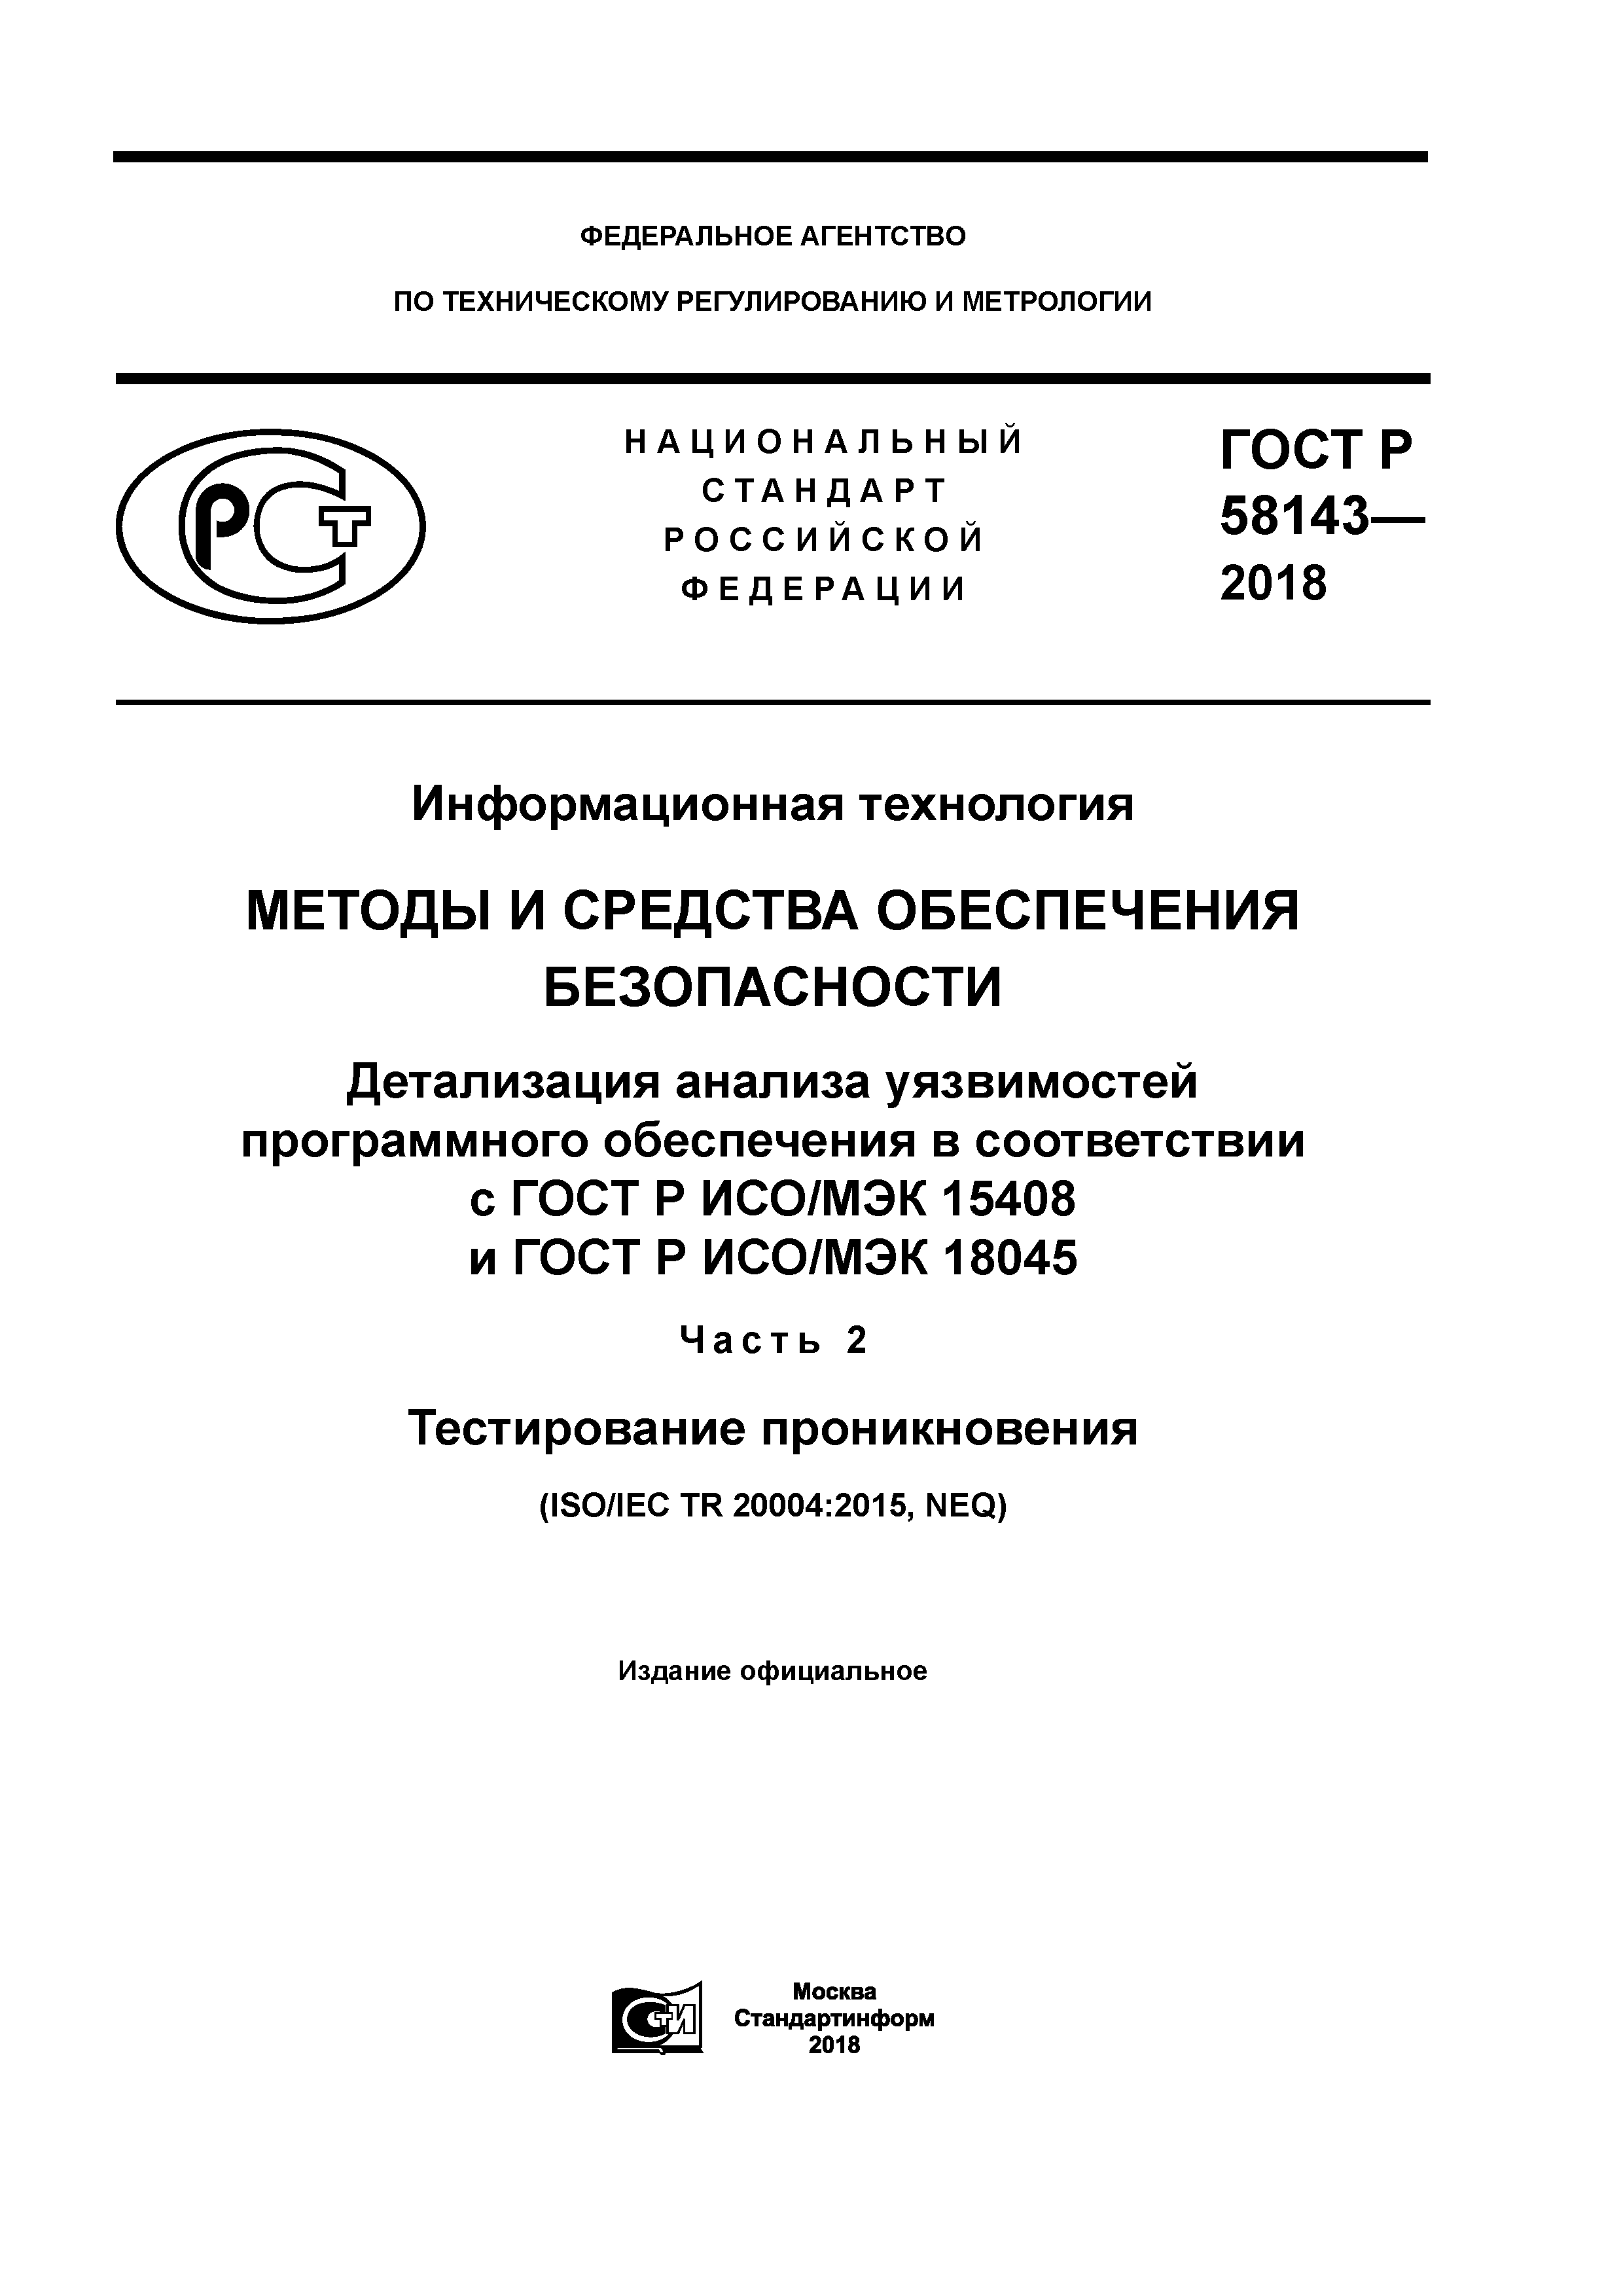 ГОСТ Р 58143-2018